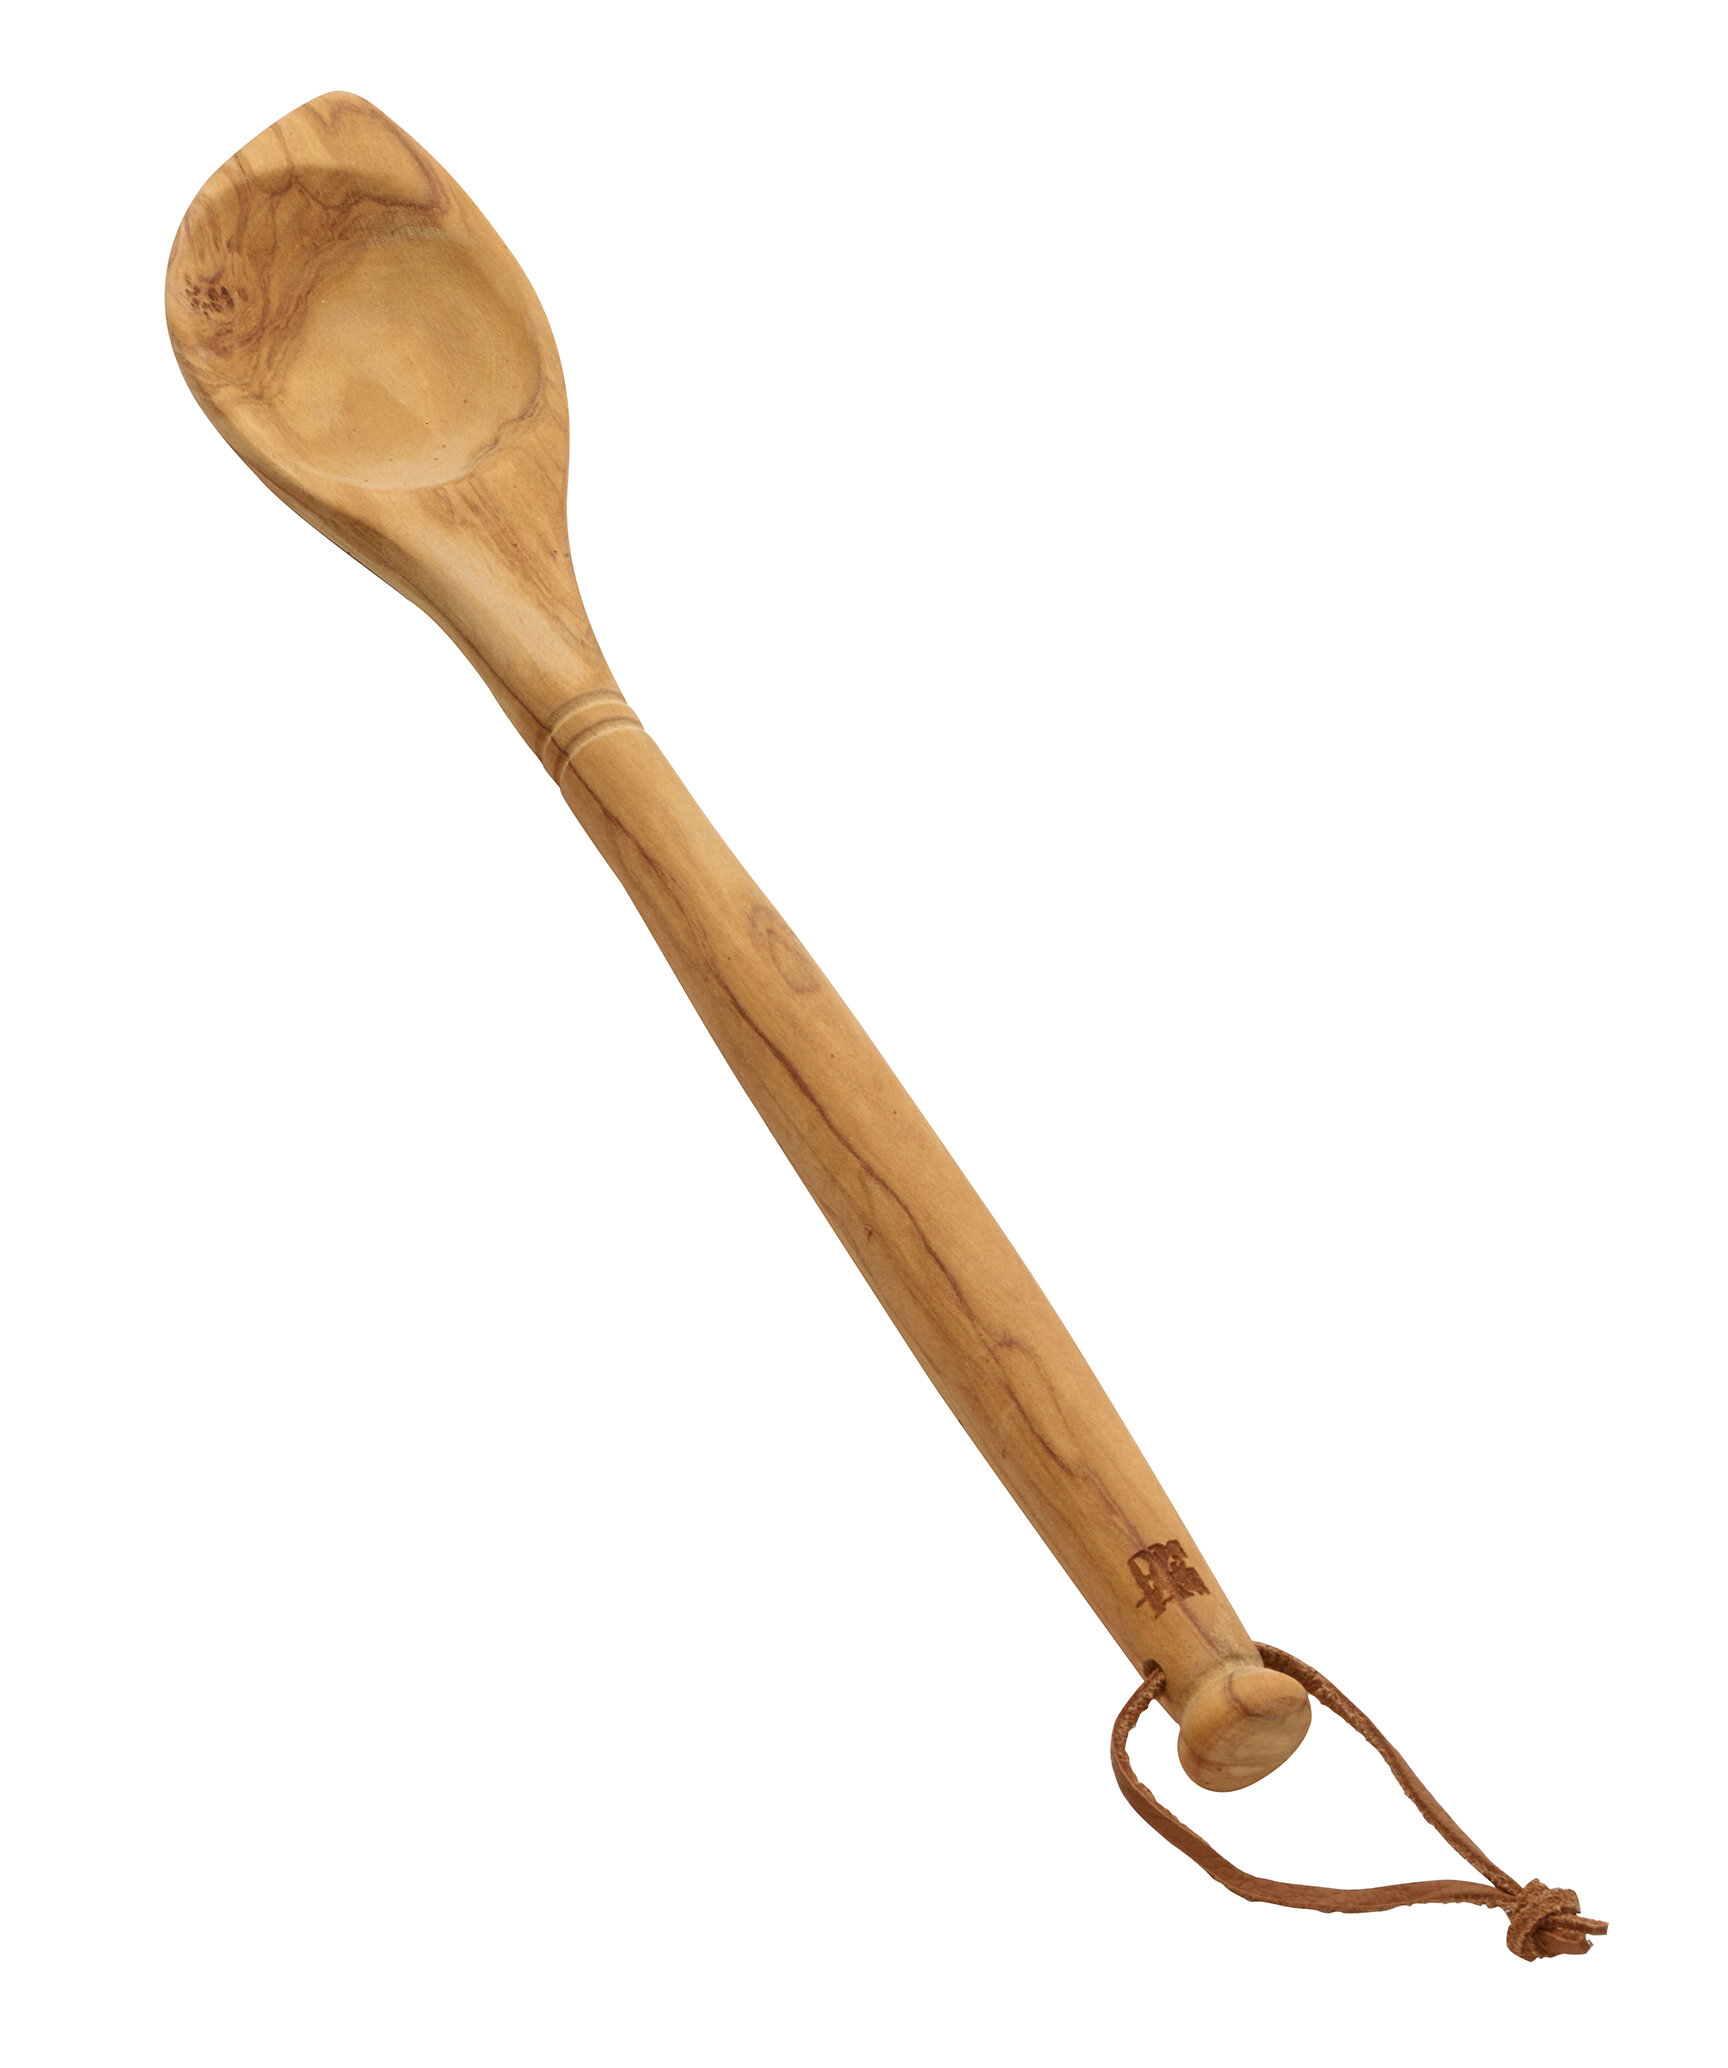 Le Creuset Revolution Wooden Spoon